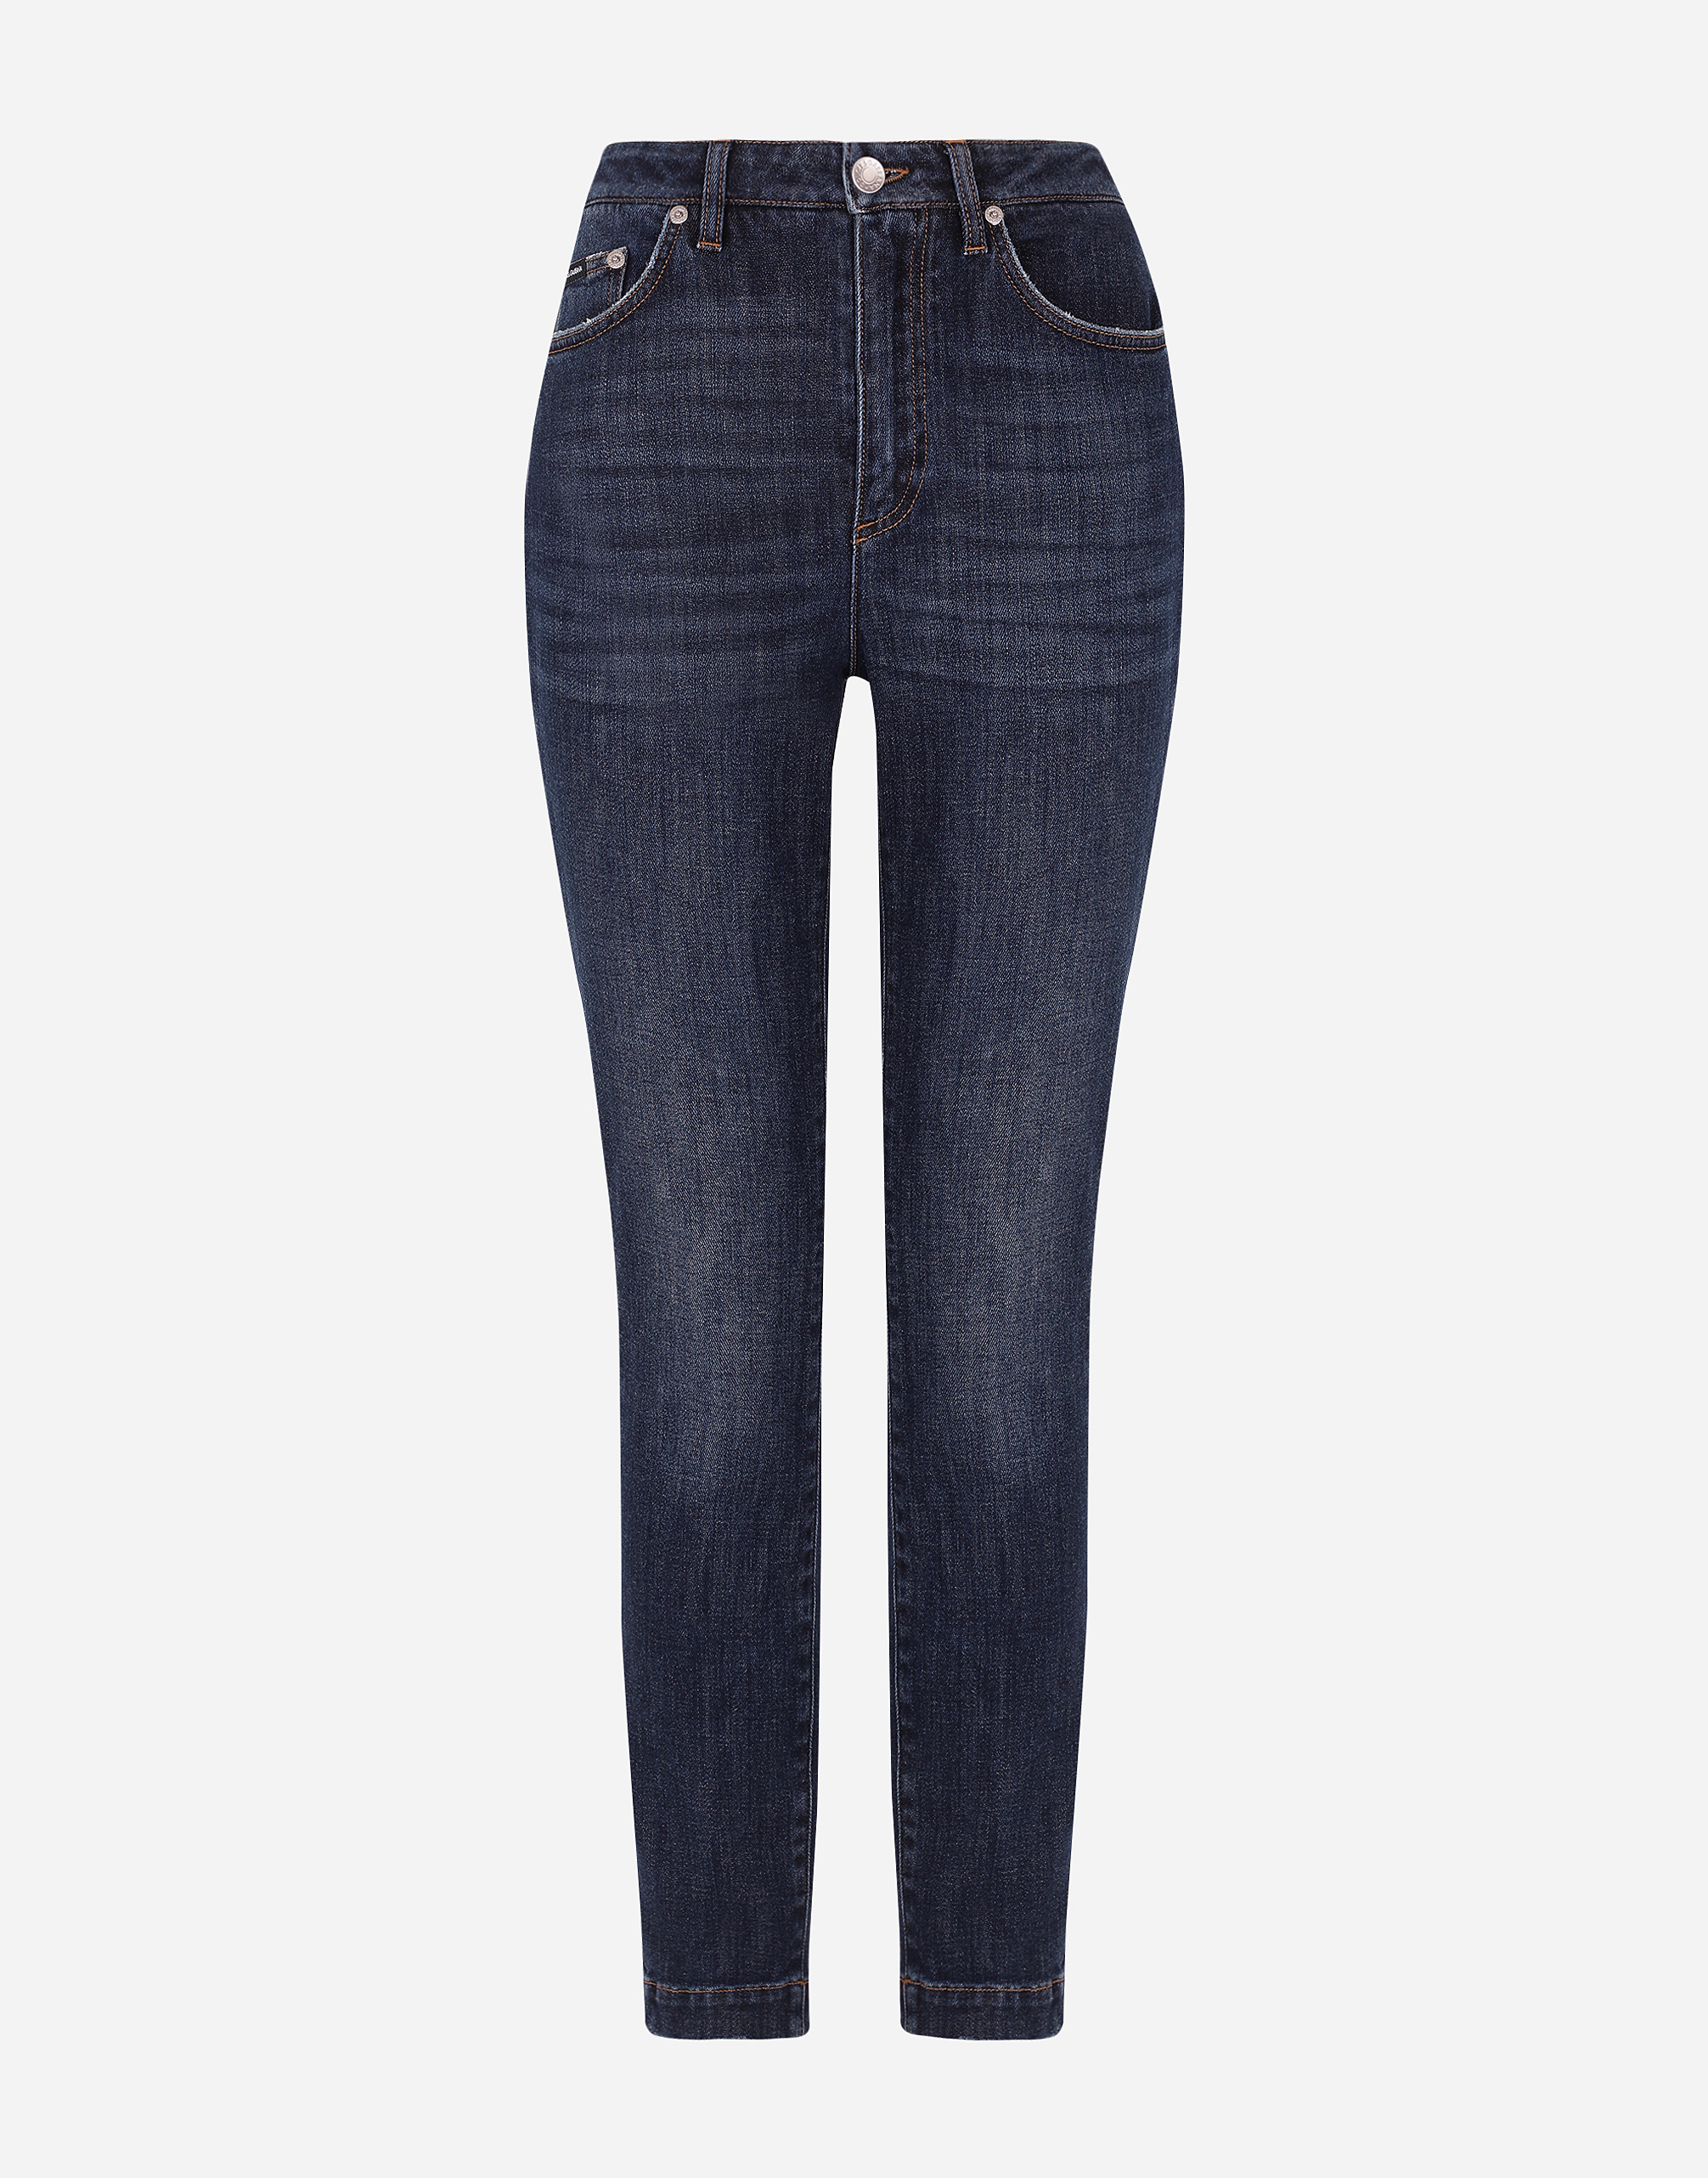 Deep blue denim Audrey jeans in Multicolor